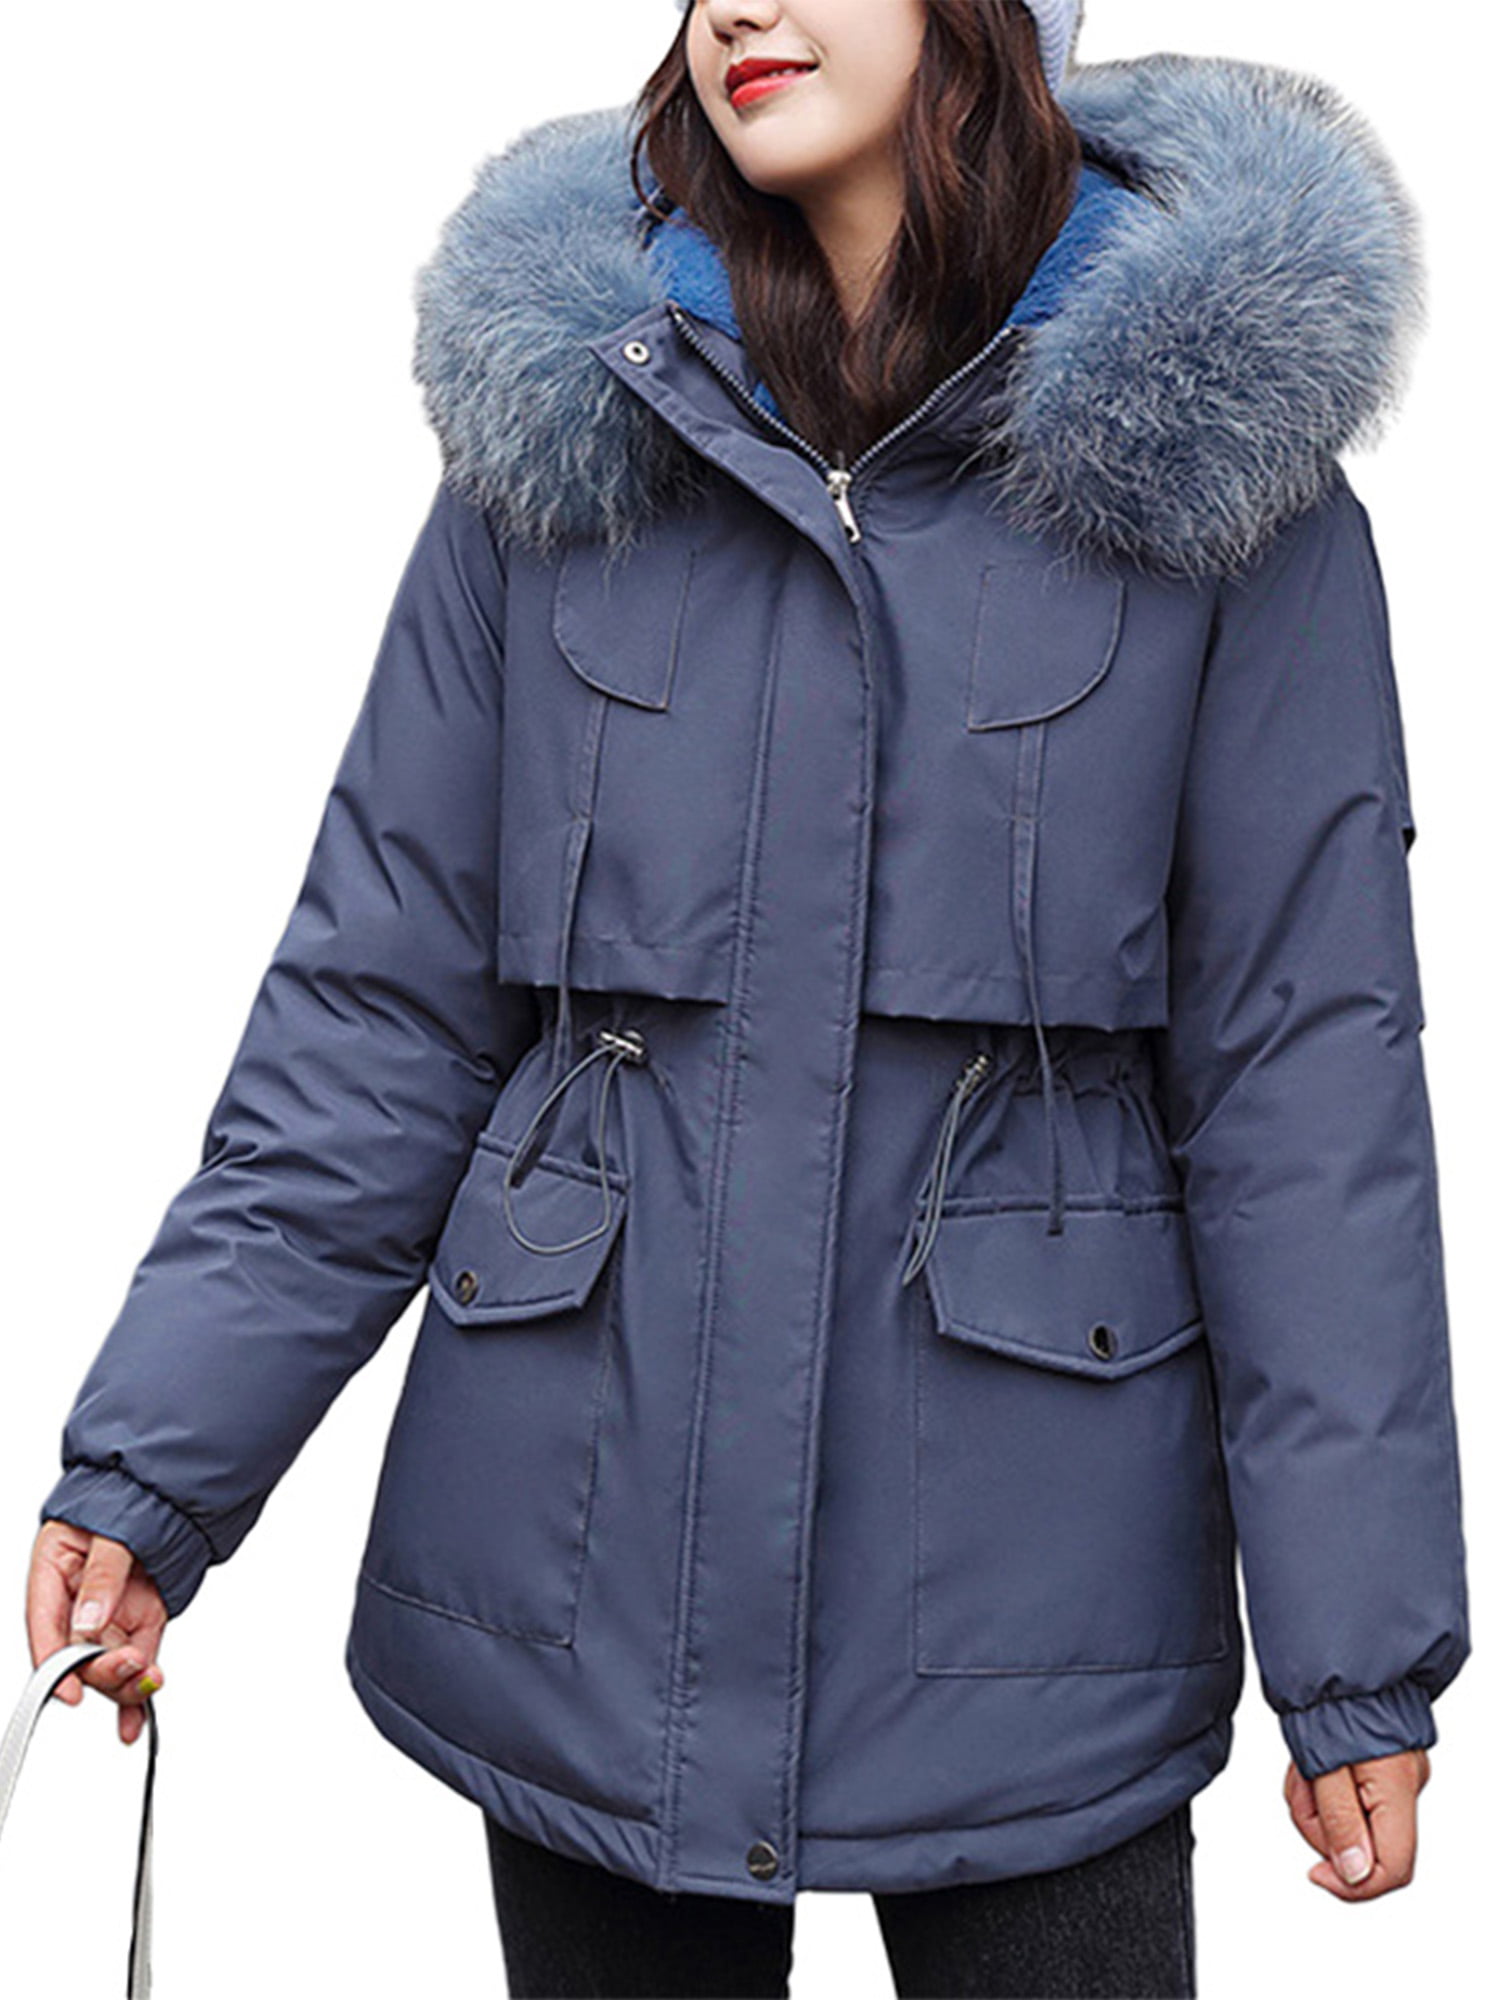 Padded Outwear Warm Coat Jacket Winter Hooded Overcoat Faux Fur Cotton Thicken